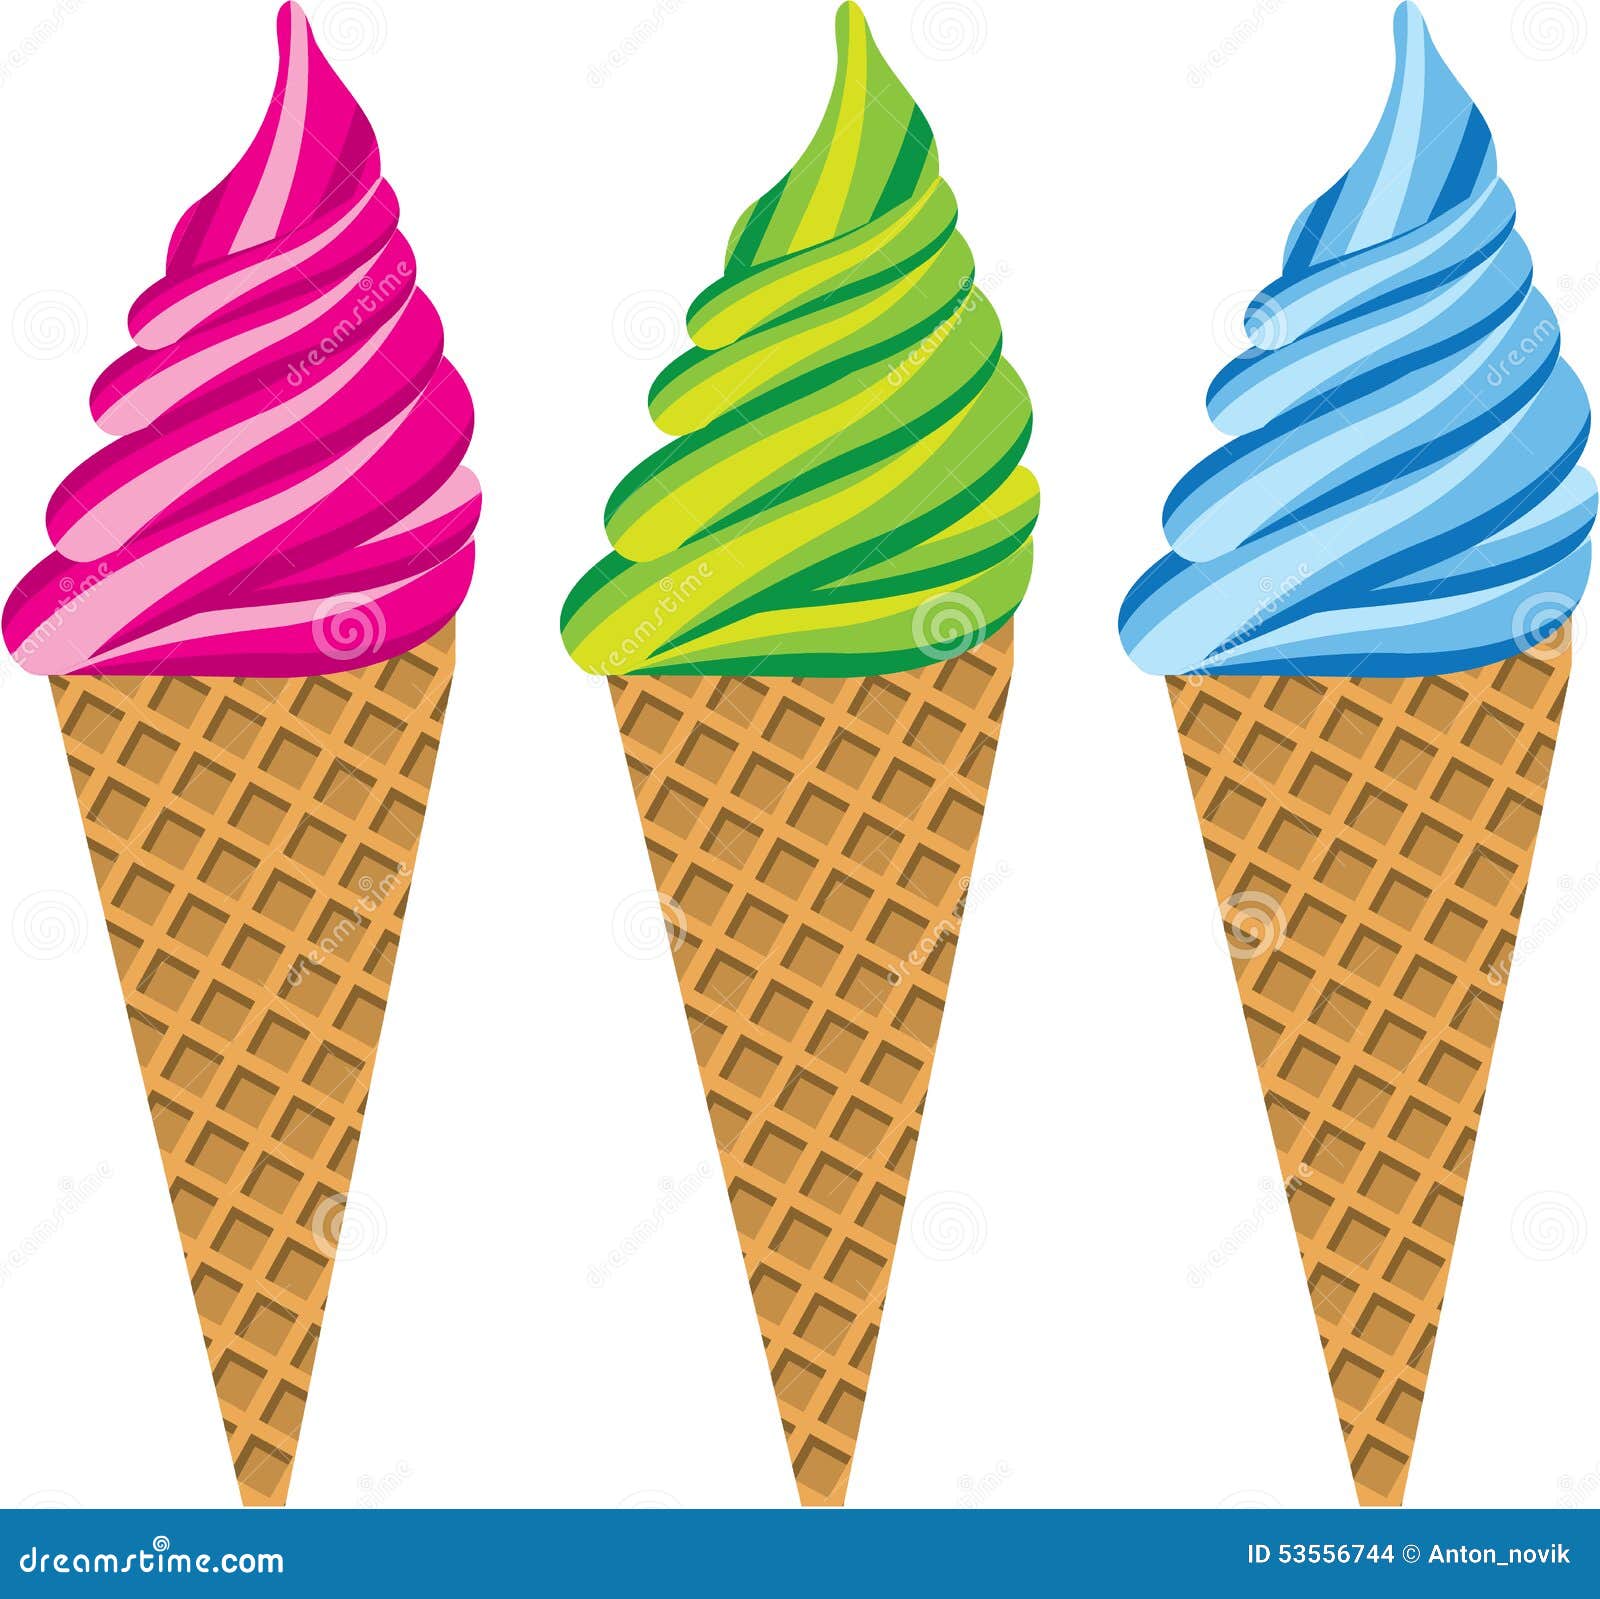 ice-cream-cones-vector-stock-illustration-image-53556744